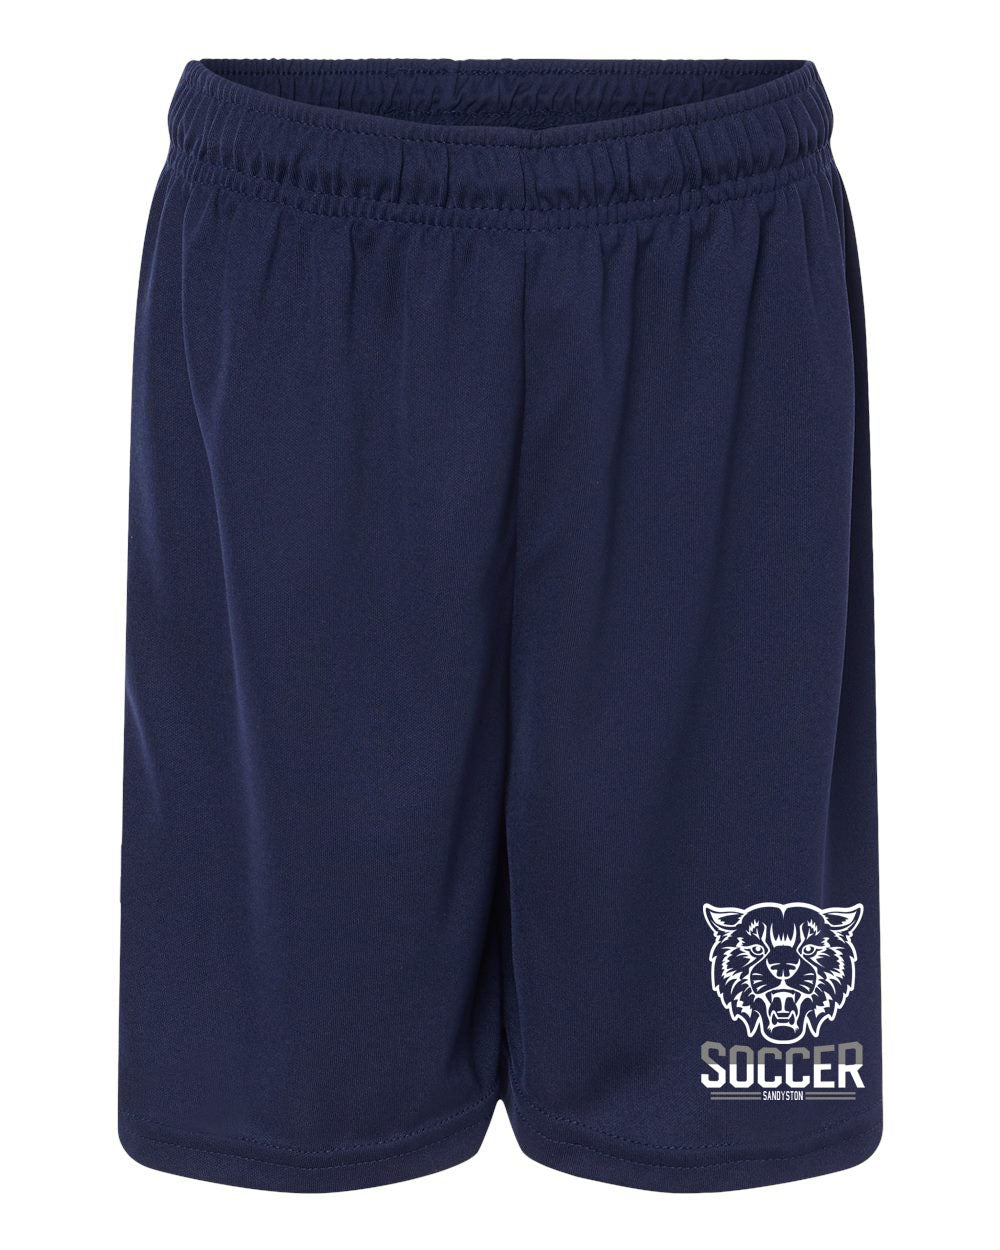 Sandyston Soccer Design 5 Shorts